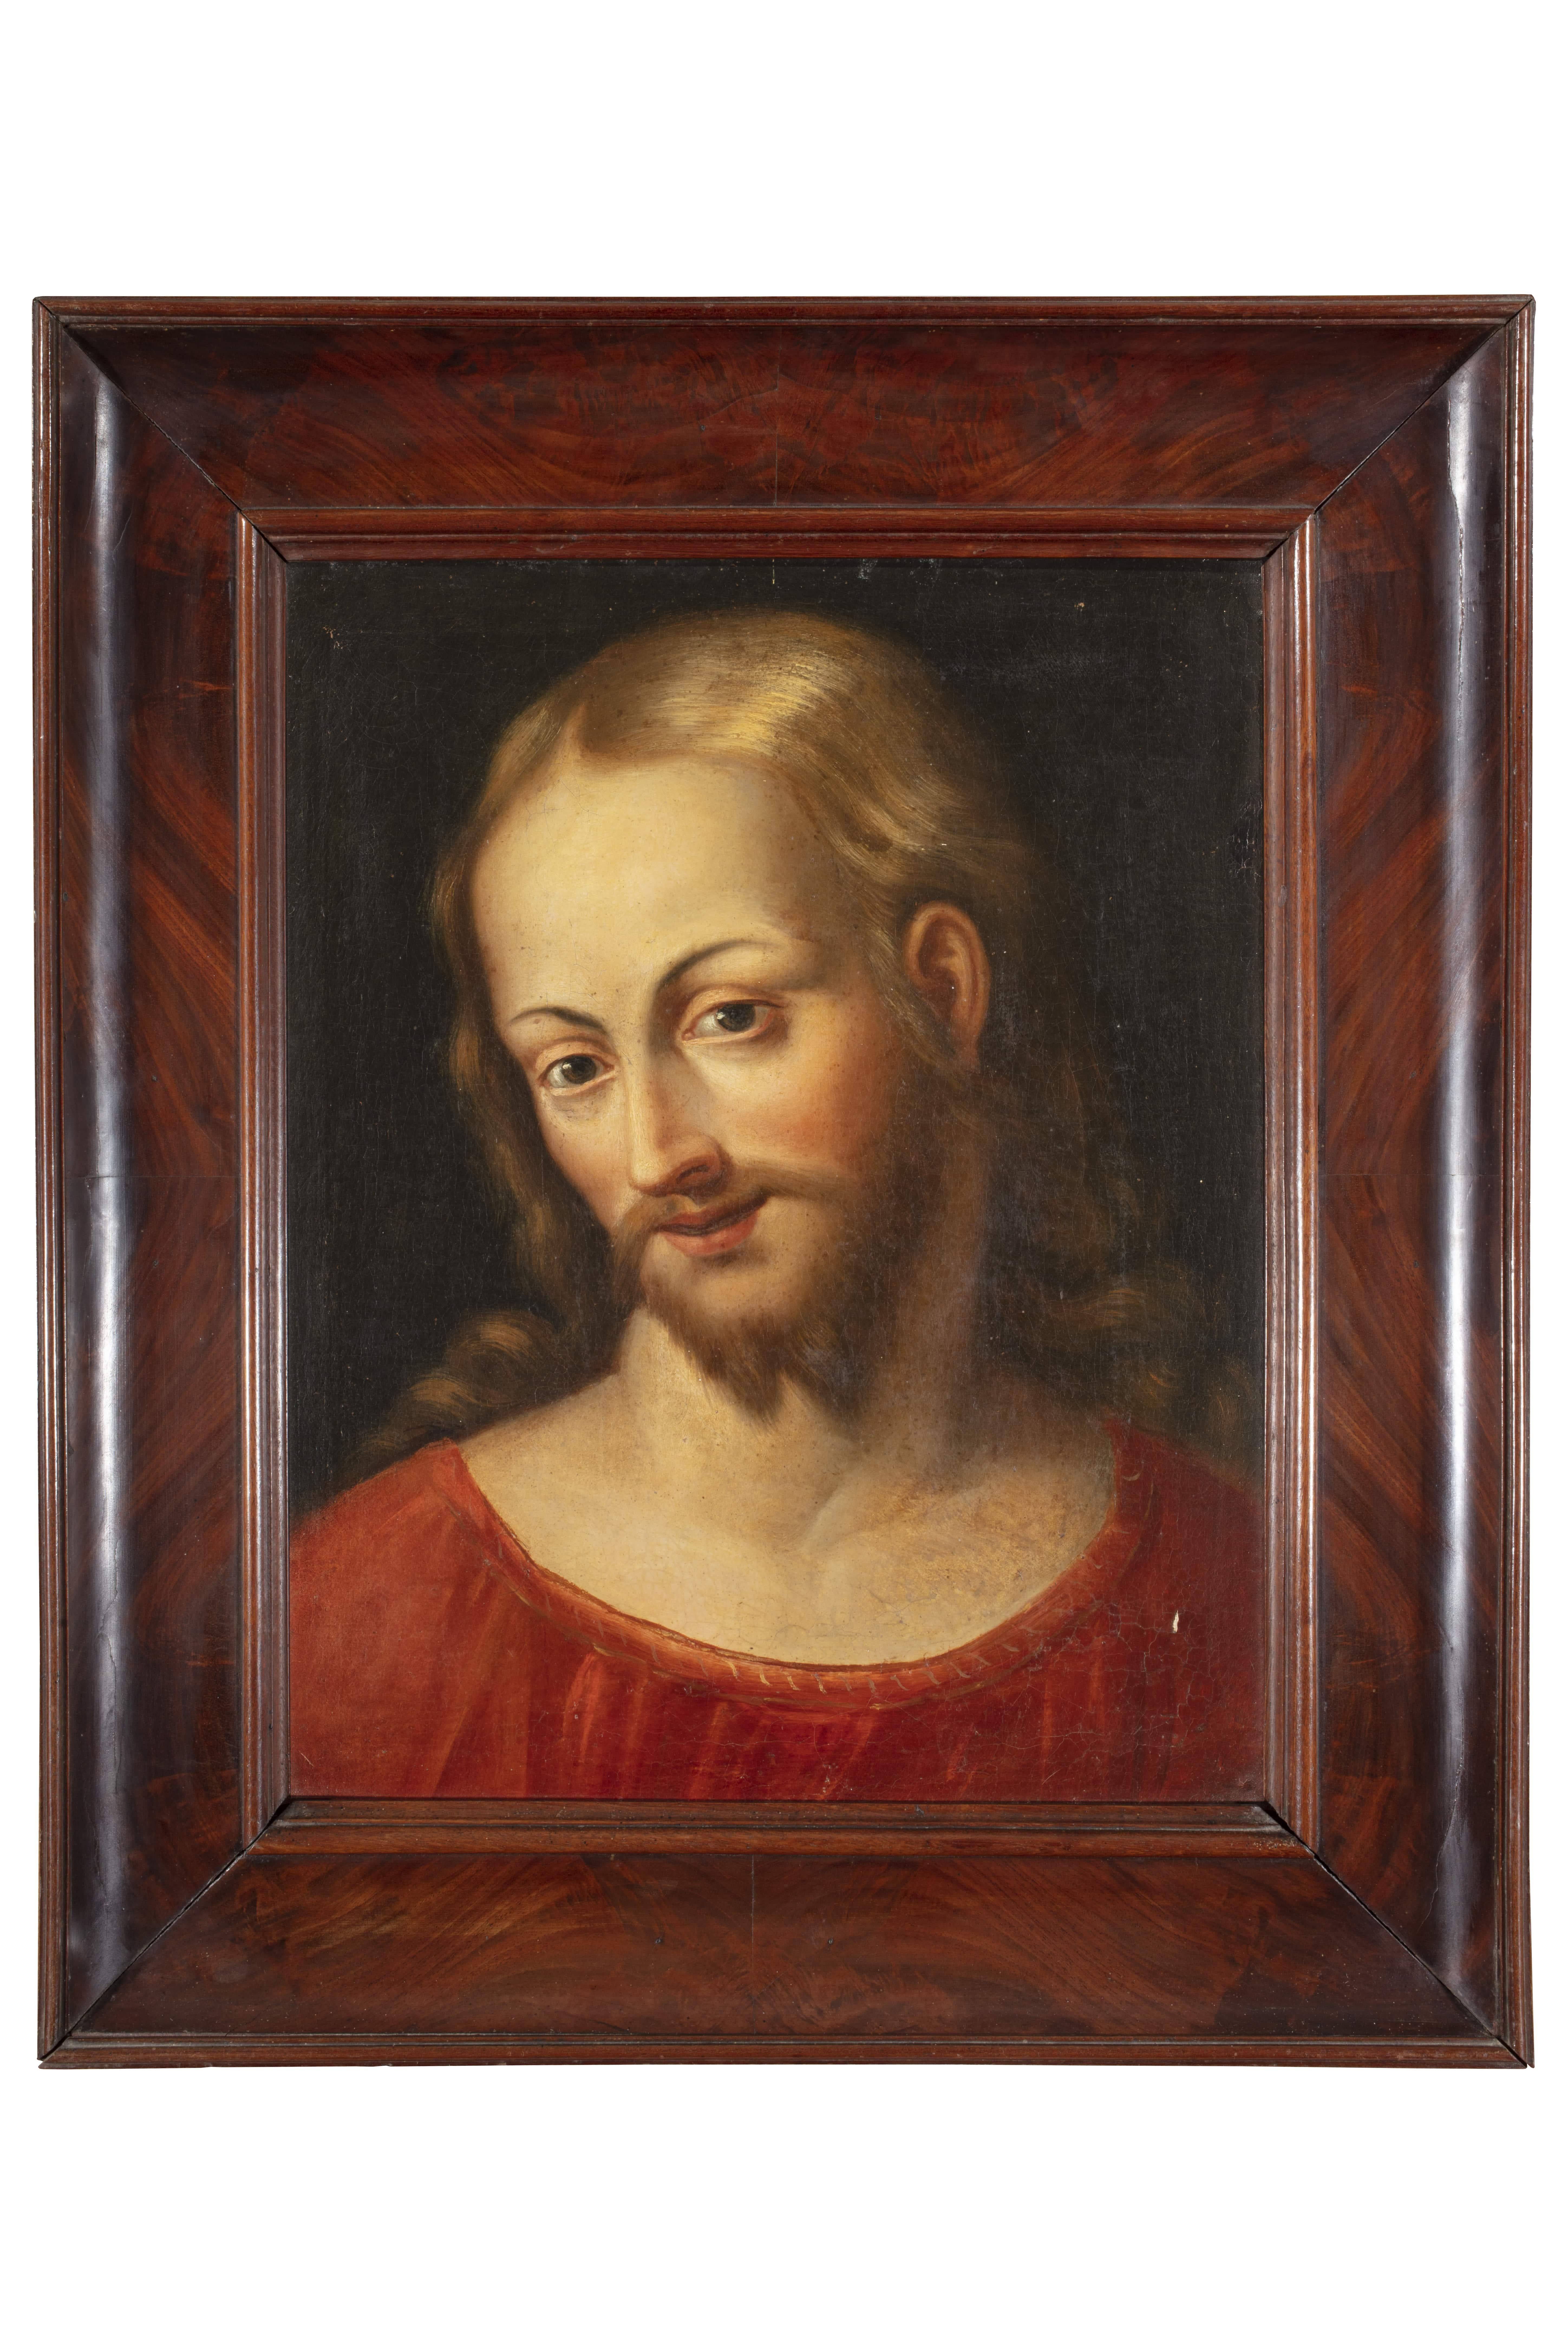 Bernardino Detti (Pistoia, 1498 – Pistoia, 1572) Figurative Painting - 16th Century by Bernardino Detti Face of Christ Oil on Canvas